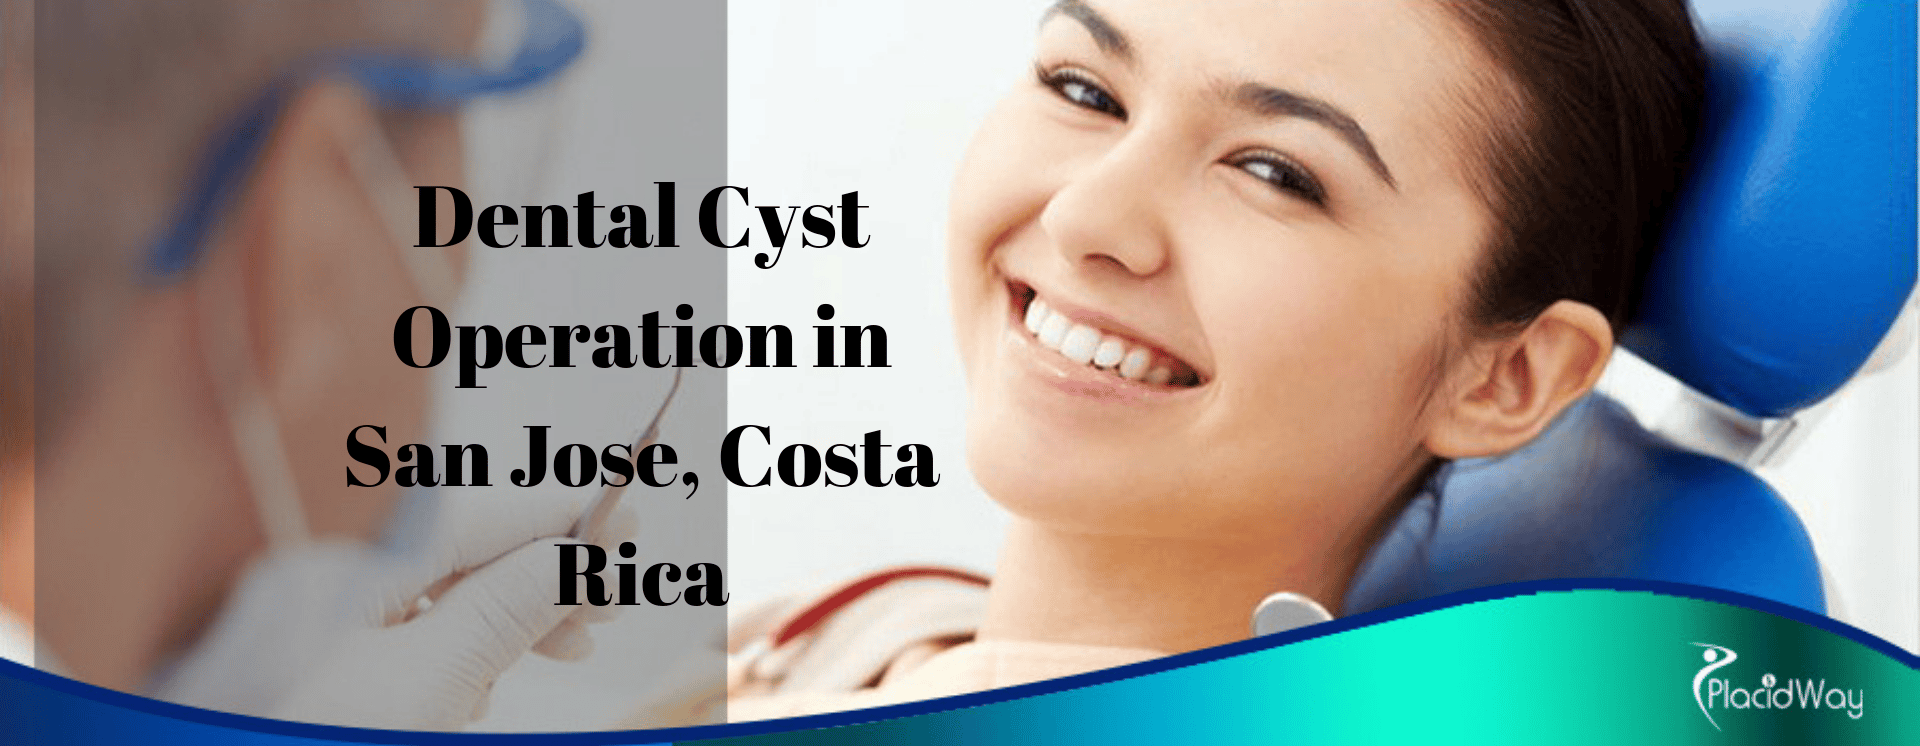 Dental Cyst Operation in San Jose, Costa Rica